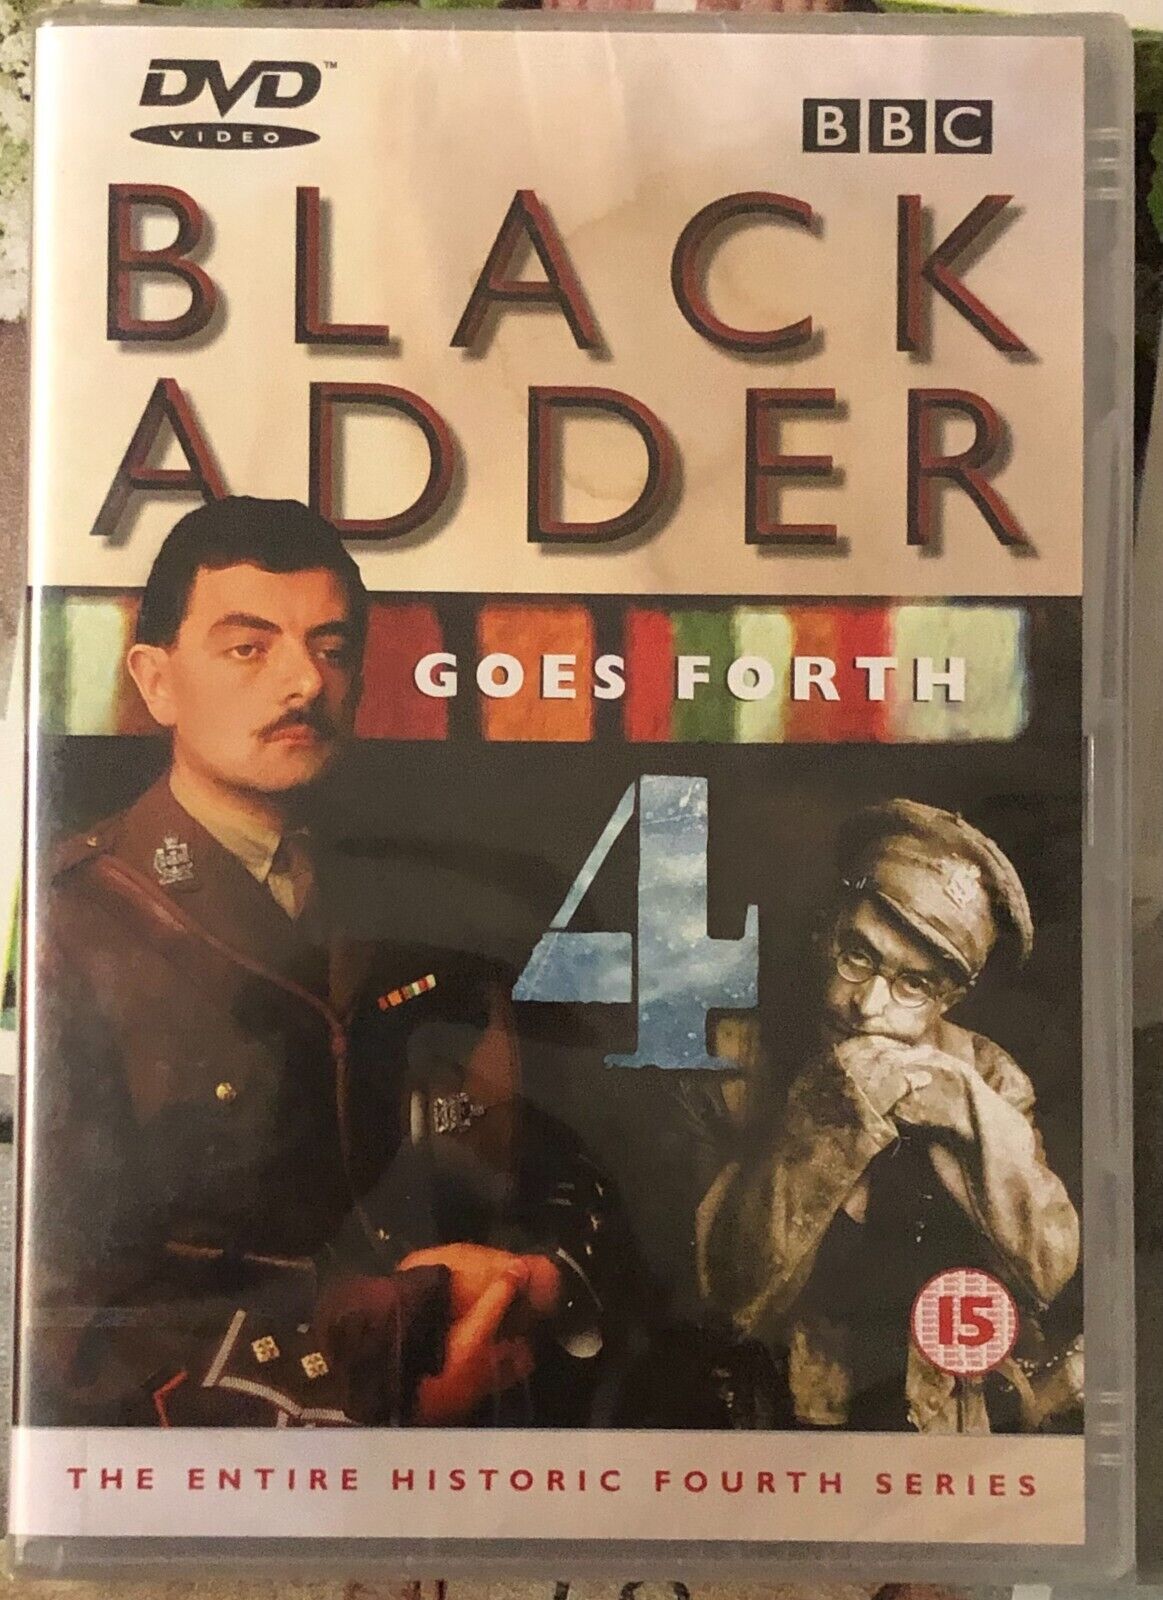 Blackadder Goes Forth DVD di Richard Boden, 1989, Bbc